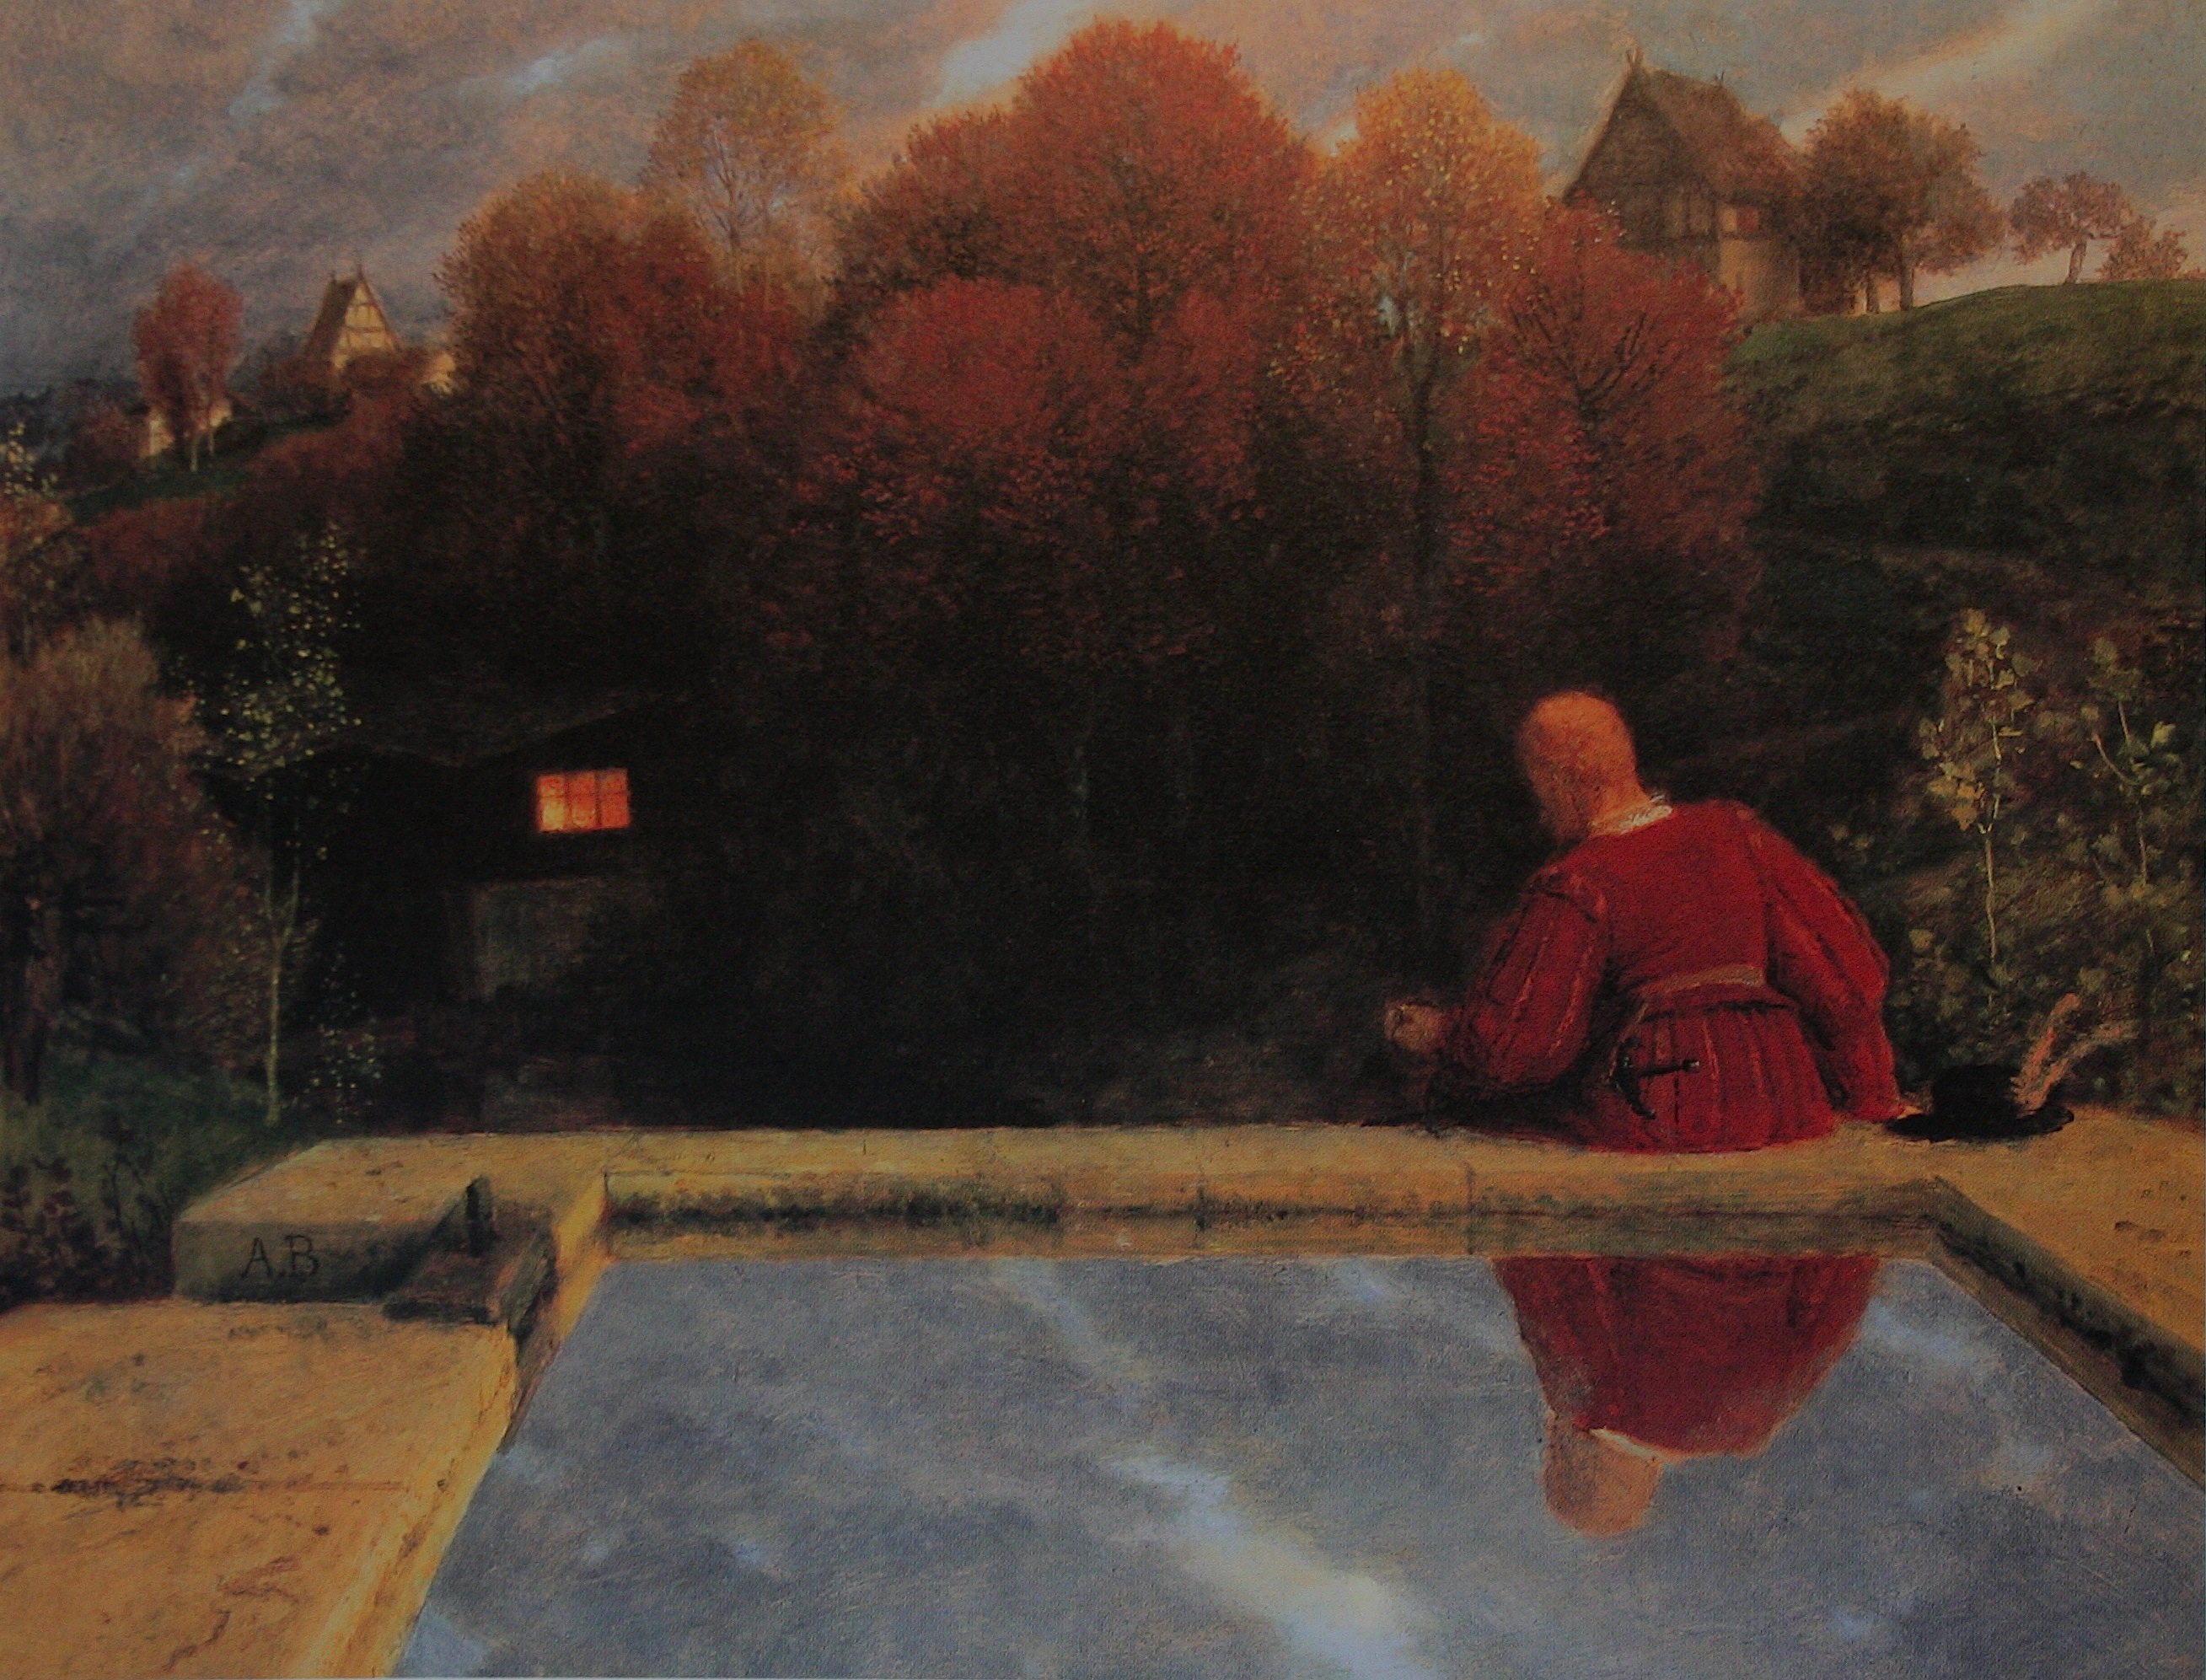 Возвращение домой  by Арнольд Бёклин - 1887 - 78.5 x 100 cm 